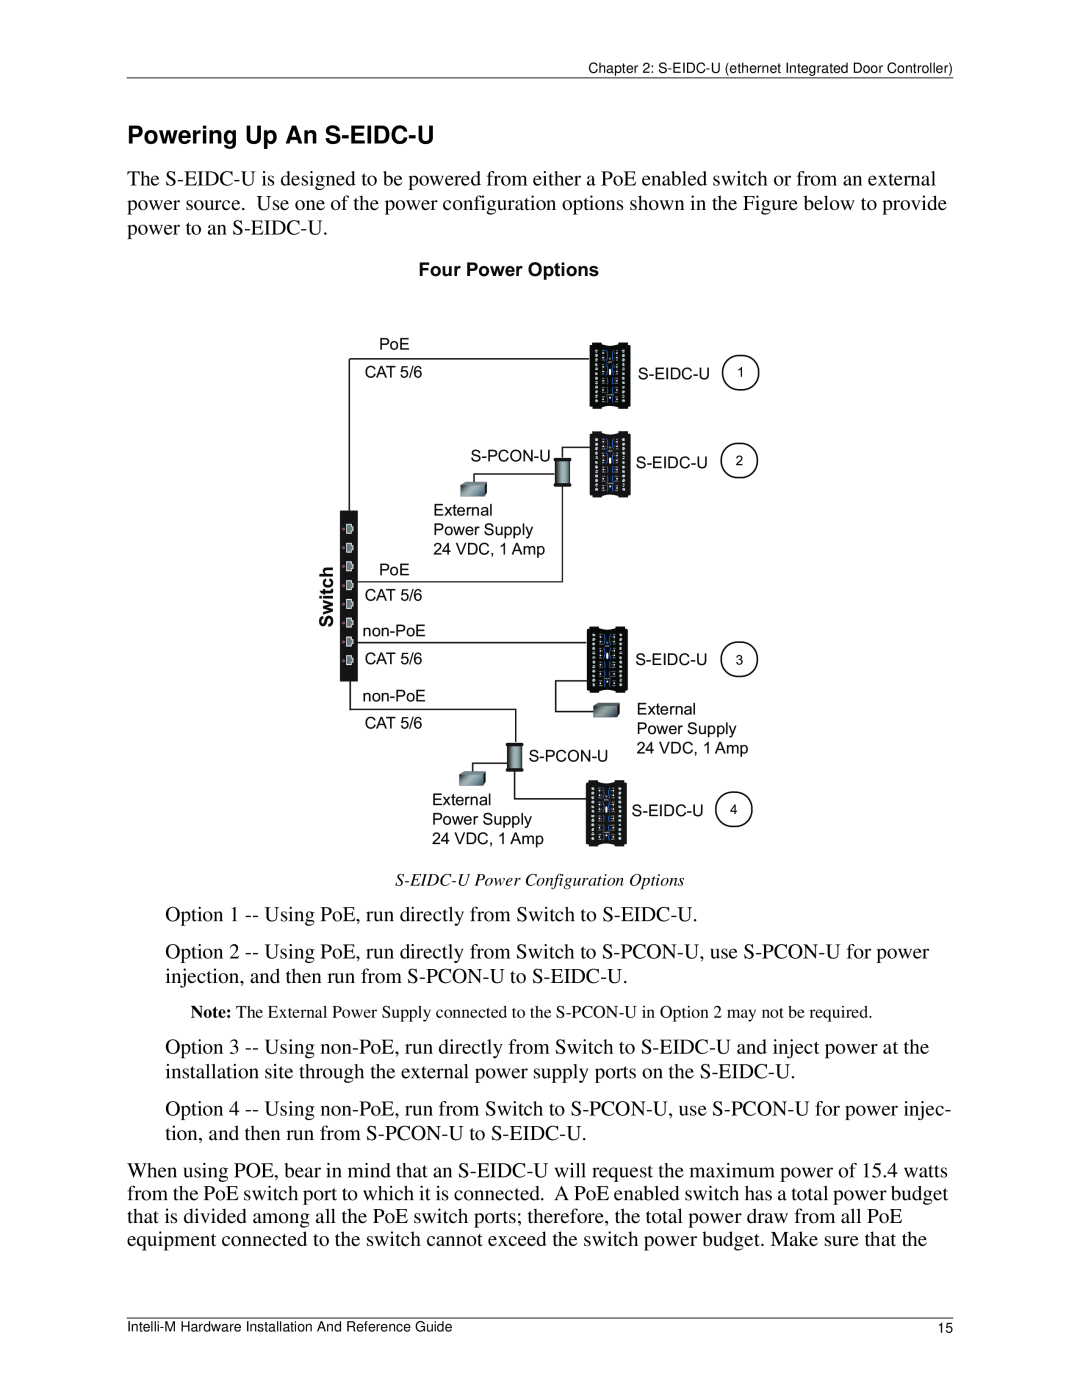 Pelco c3653m-a manual Powering Up An S-EIDC-U, Four Power Options 